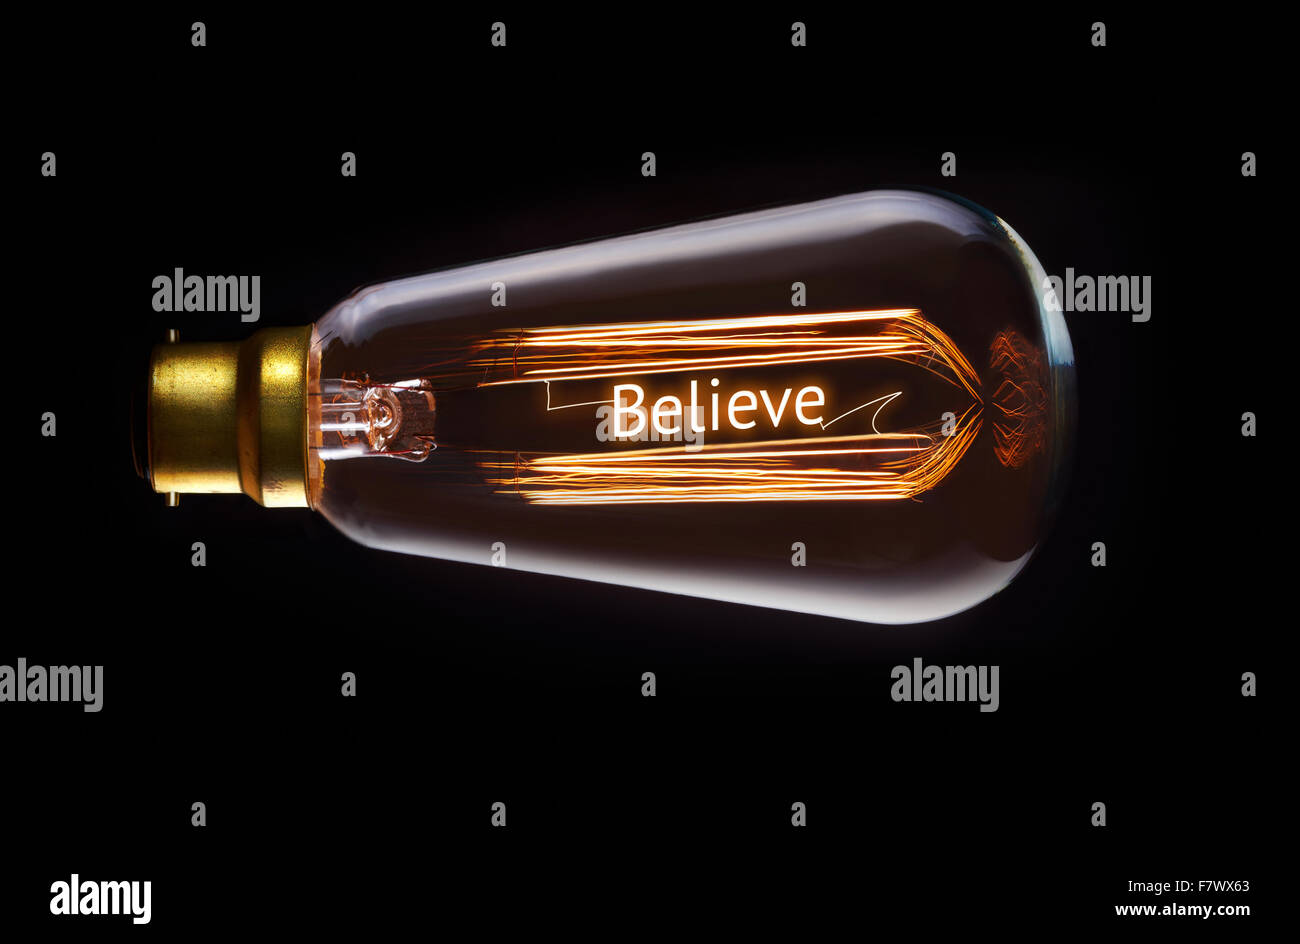 Religion, believe concept in a filament lightbulb. Stock Photo